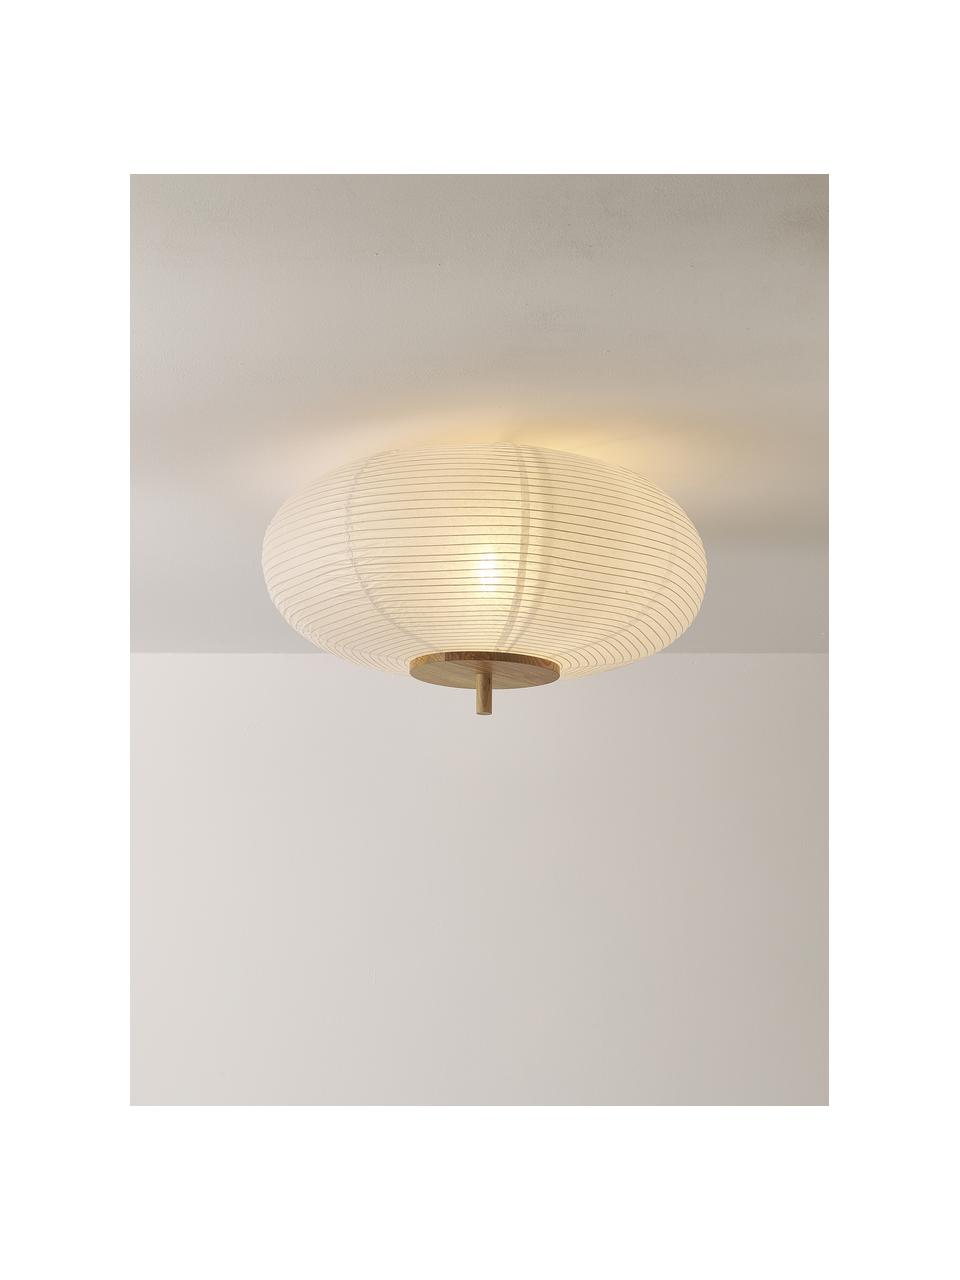 Design plafondlamp Misaki uit rijstpapier, Lampenkap: rijstpapier, Decoratie: hout, Wit, helder hout, Ø 52 x H 30 cm